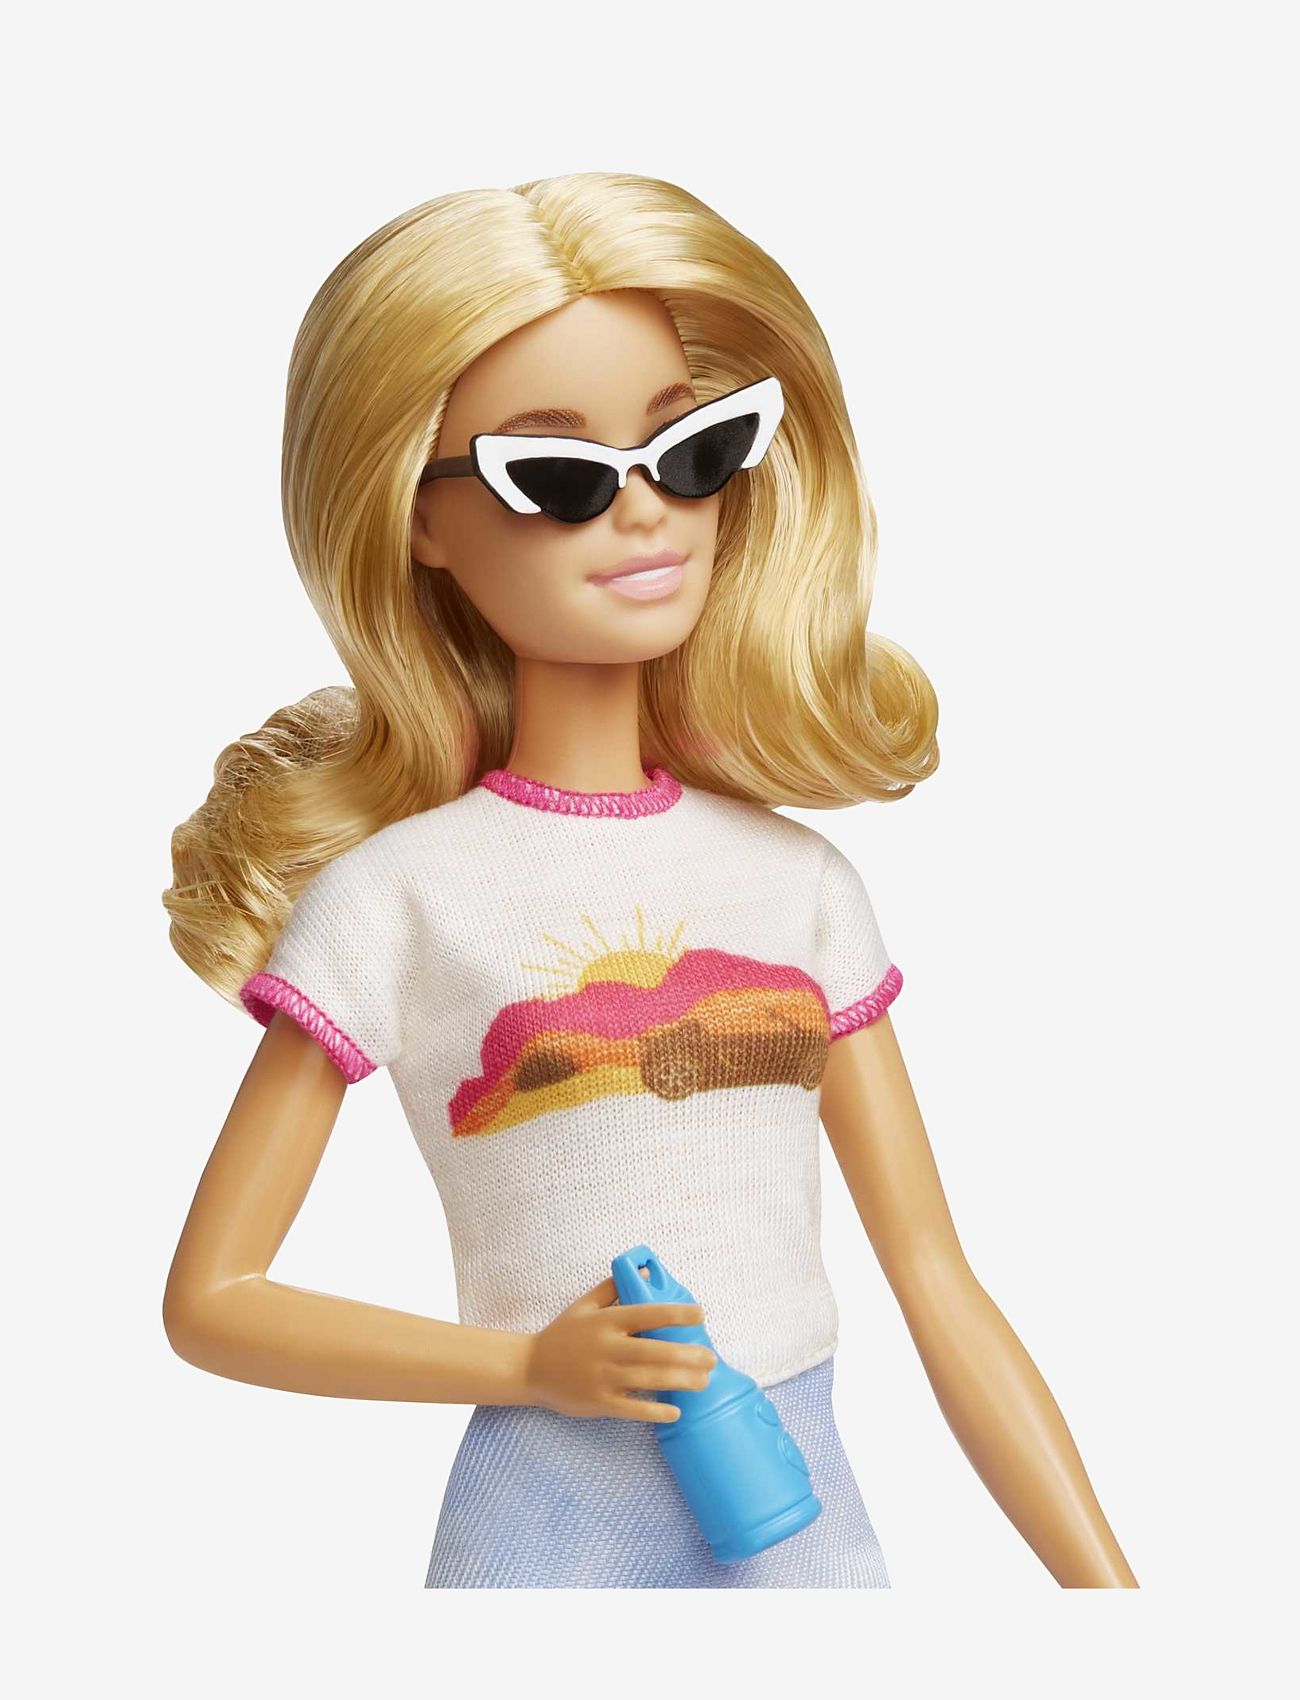 Barbie - Dreamhouse Adventures Doll and Accessories - nuket - multi color - 1